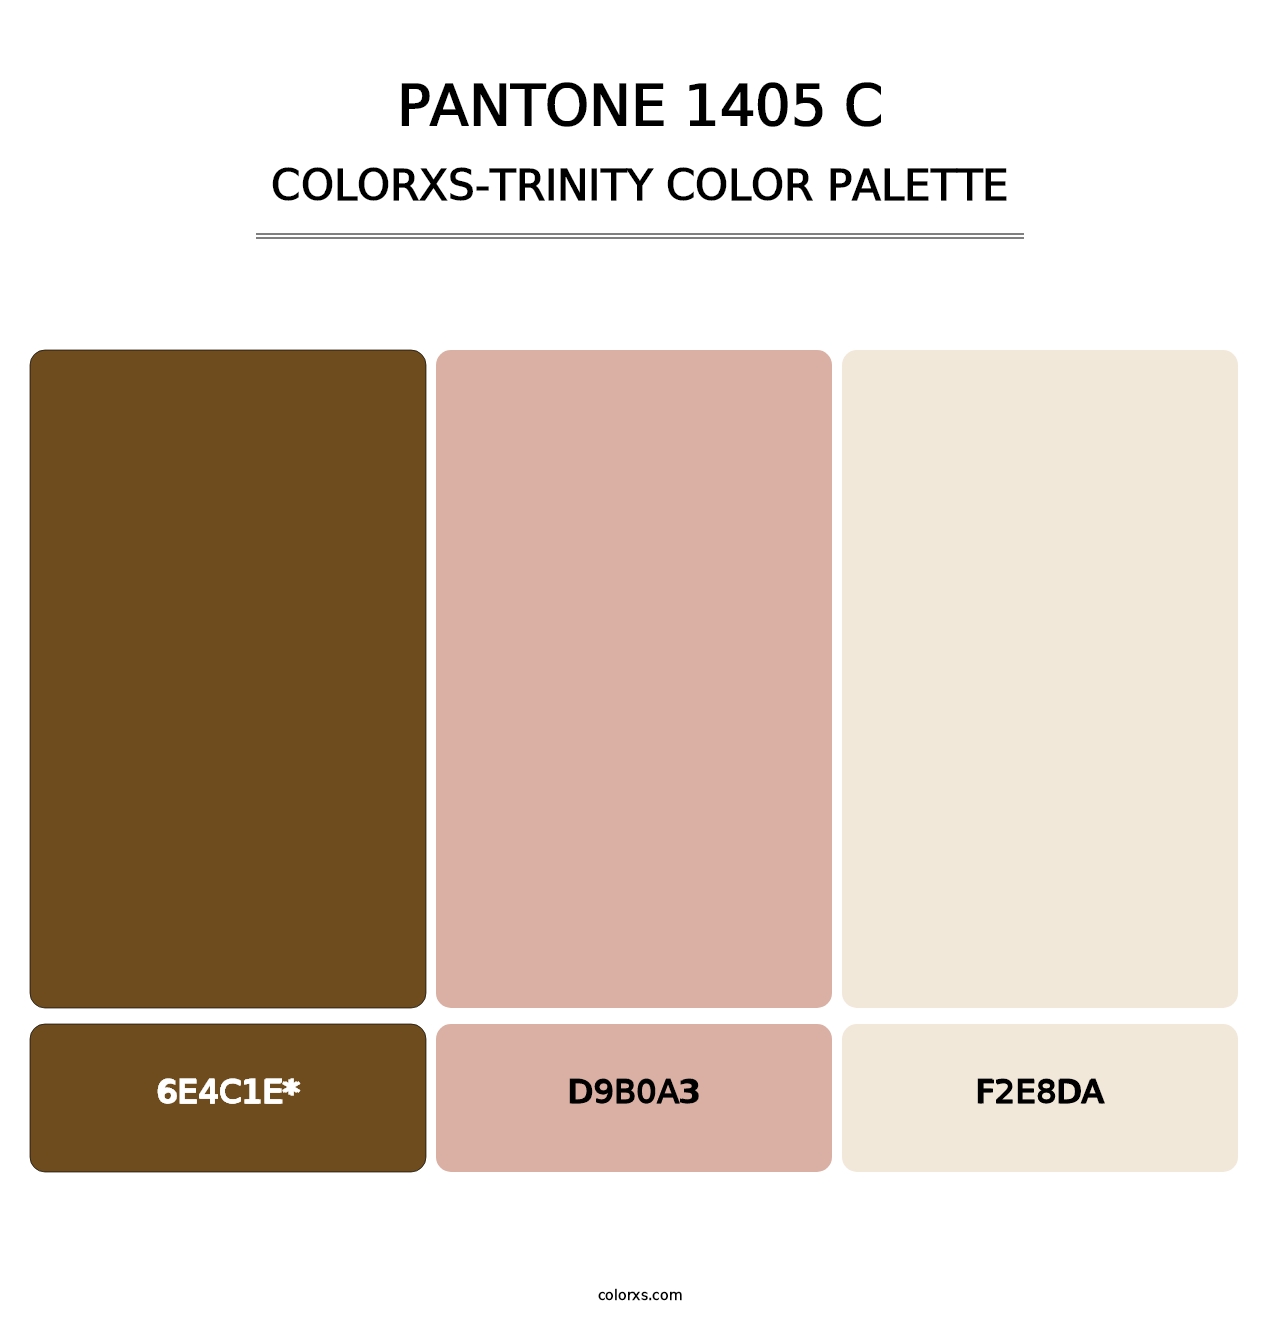 PANTONE 1405 C - Colorxs Trinity Palette